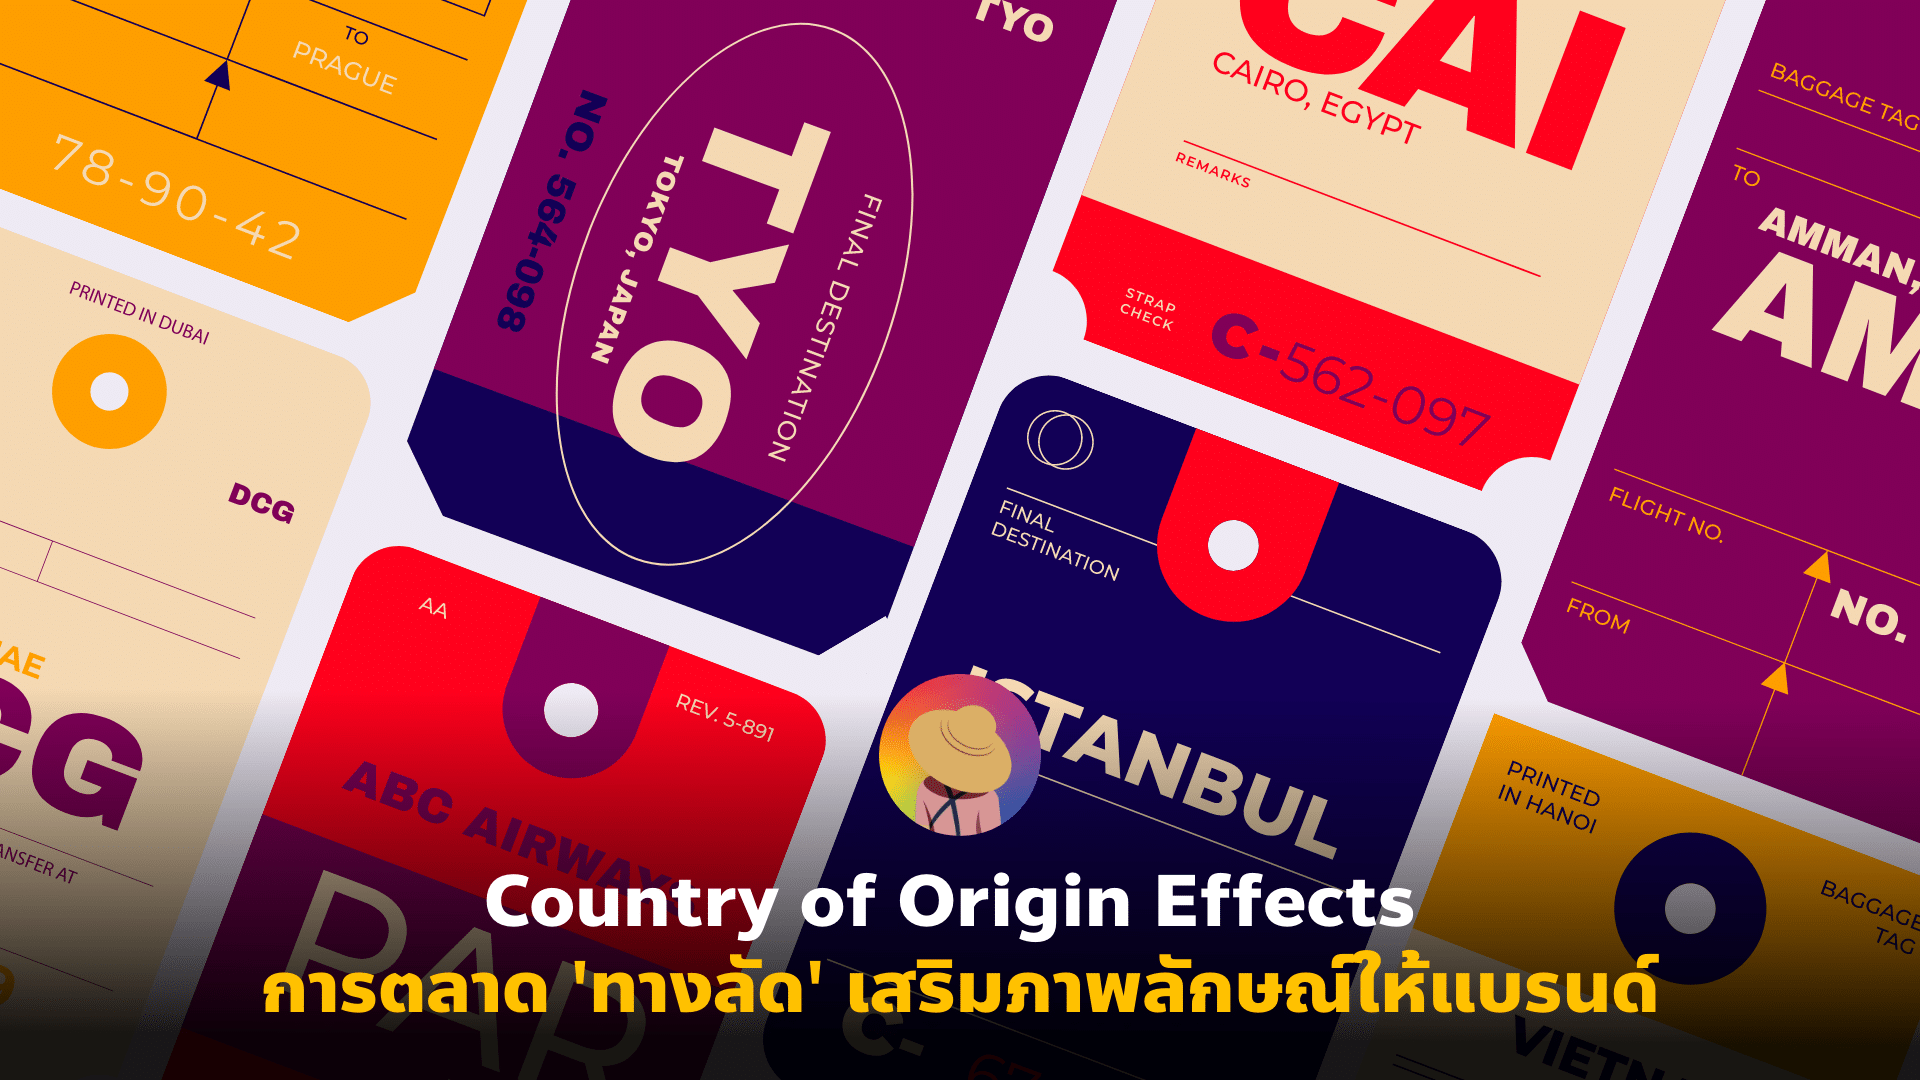 Country of Origin Effects การตลาด ‘ทางลัด’ เสริมภาพลักษณ์ให้แบรนด์